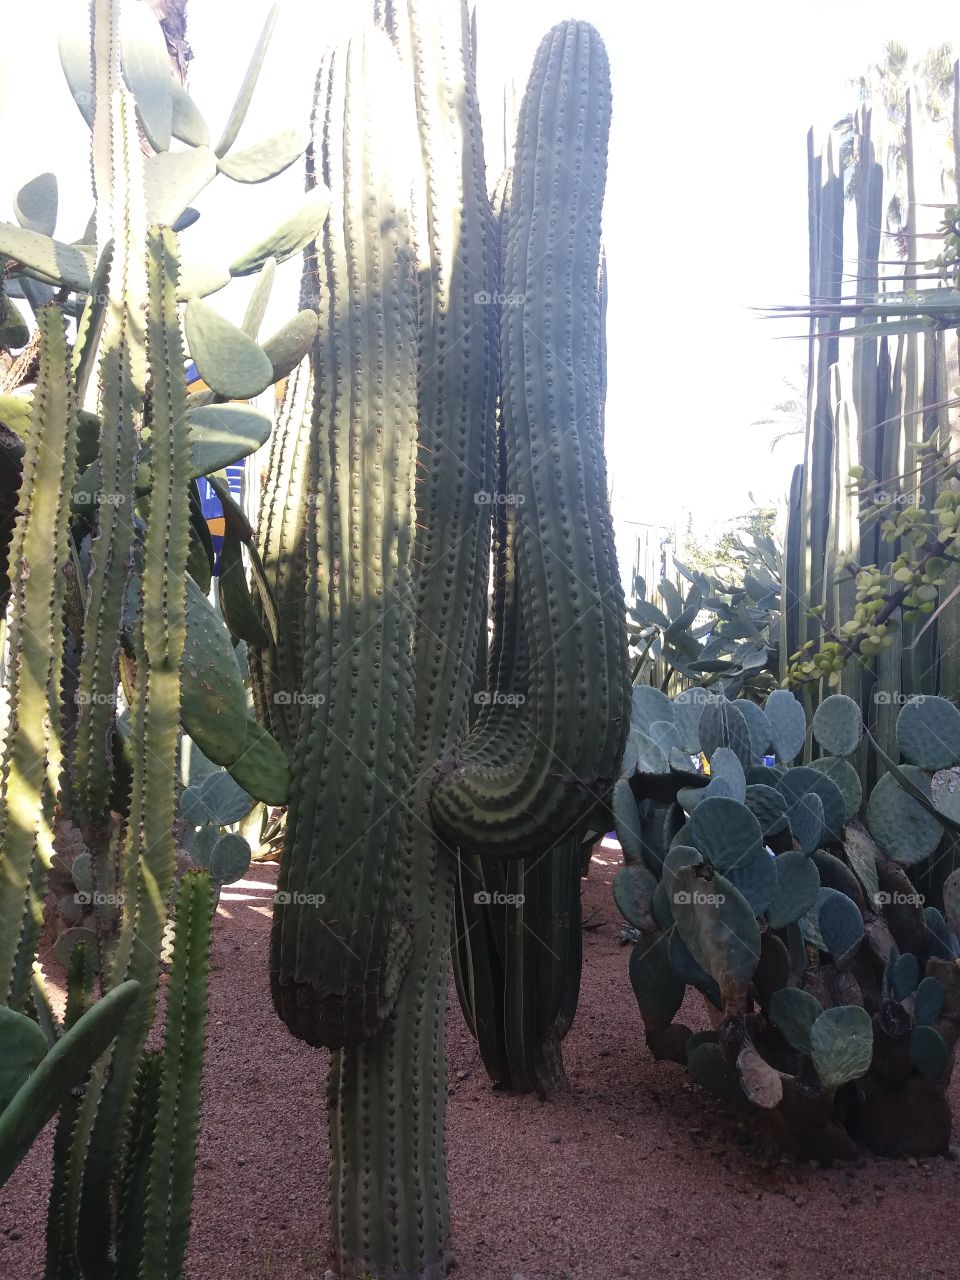 cactus jardins majorelle